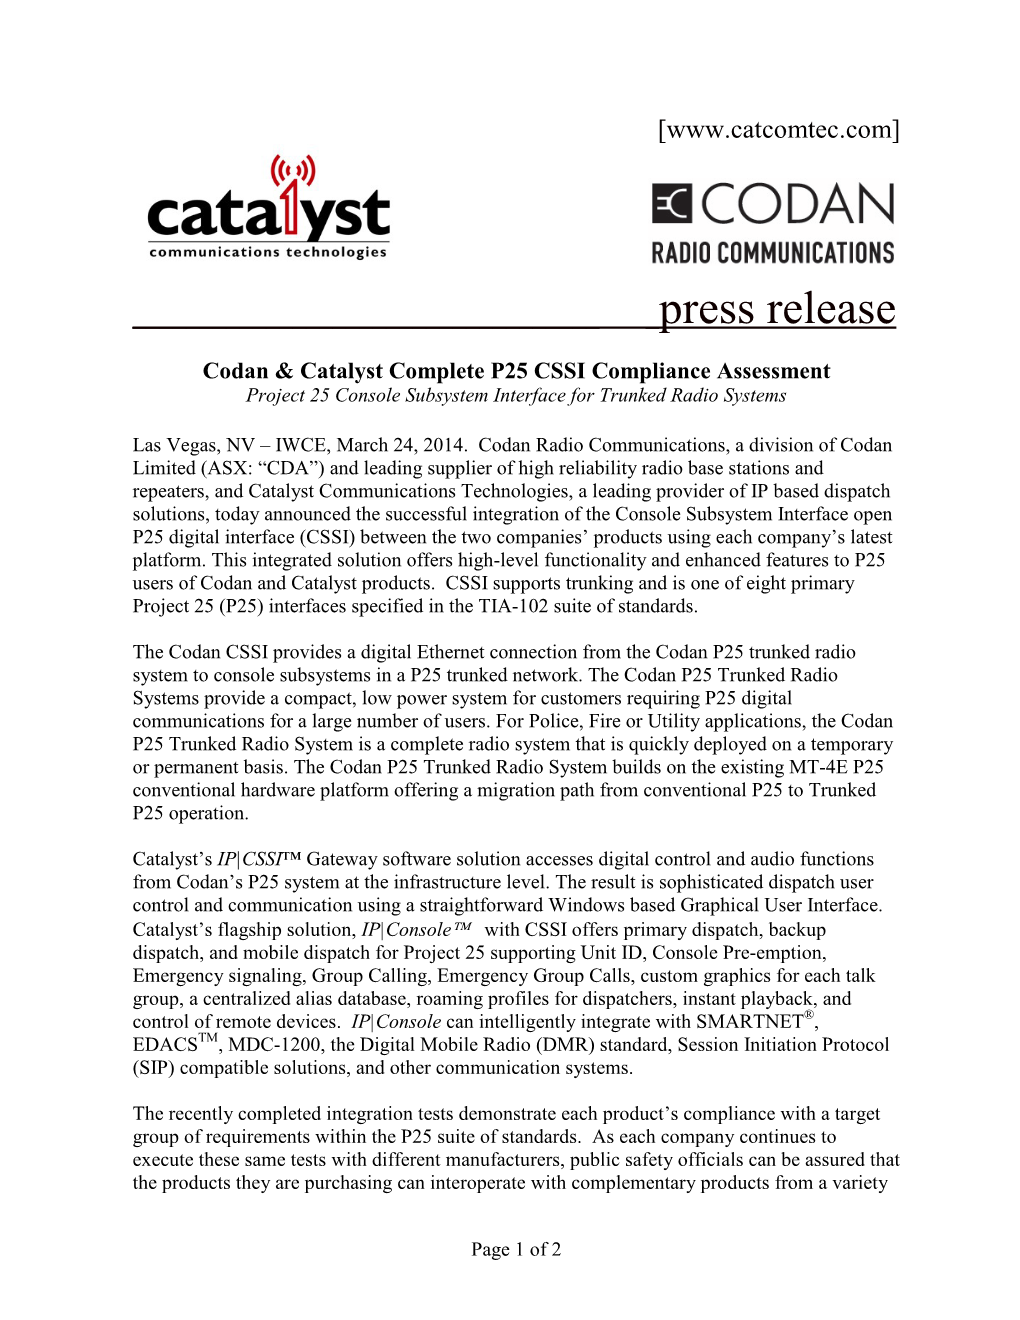 Codan & Catalyst Complete P25 CSSI Compliance Assessment